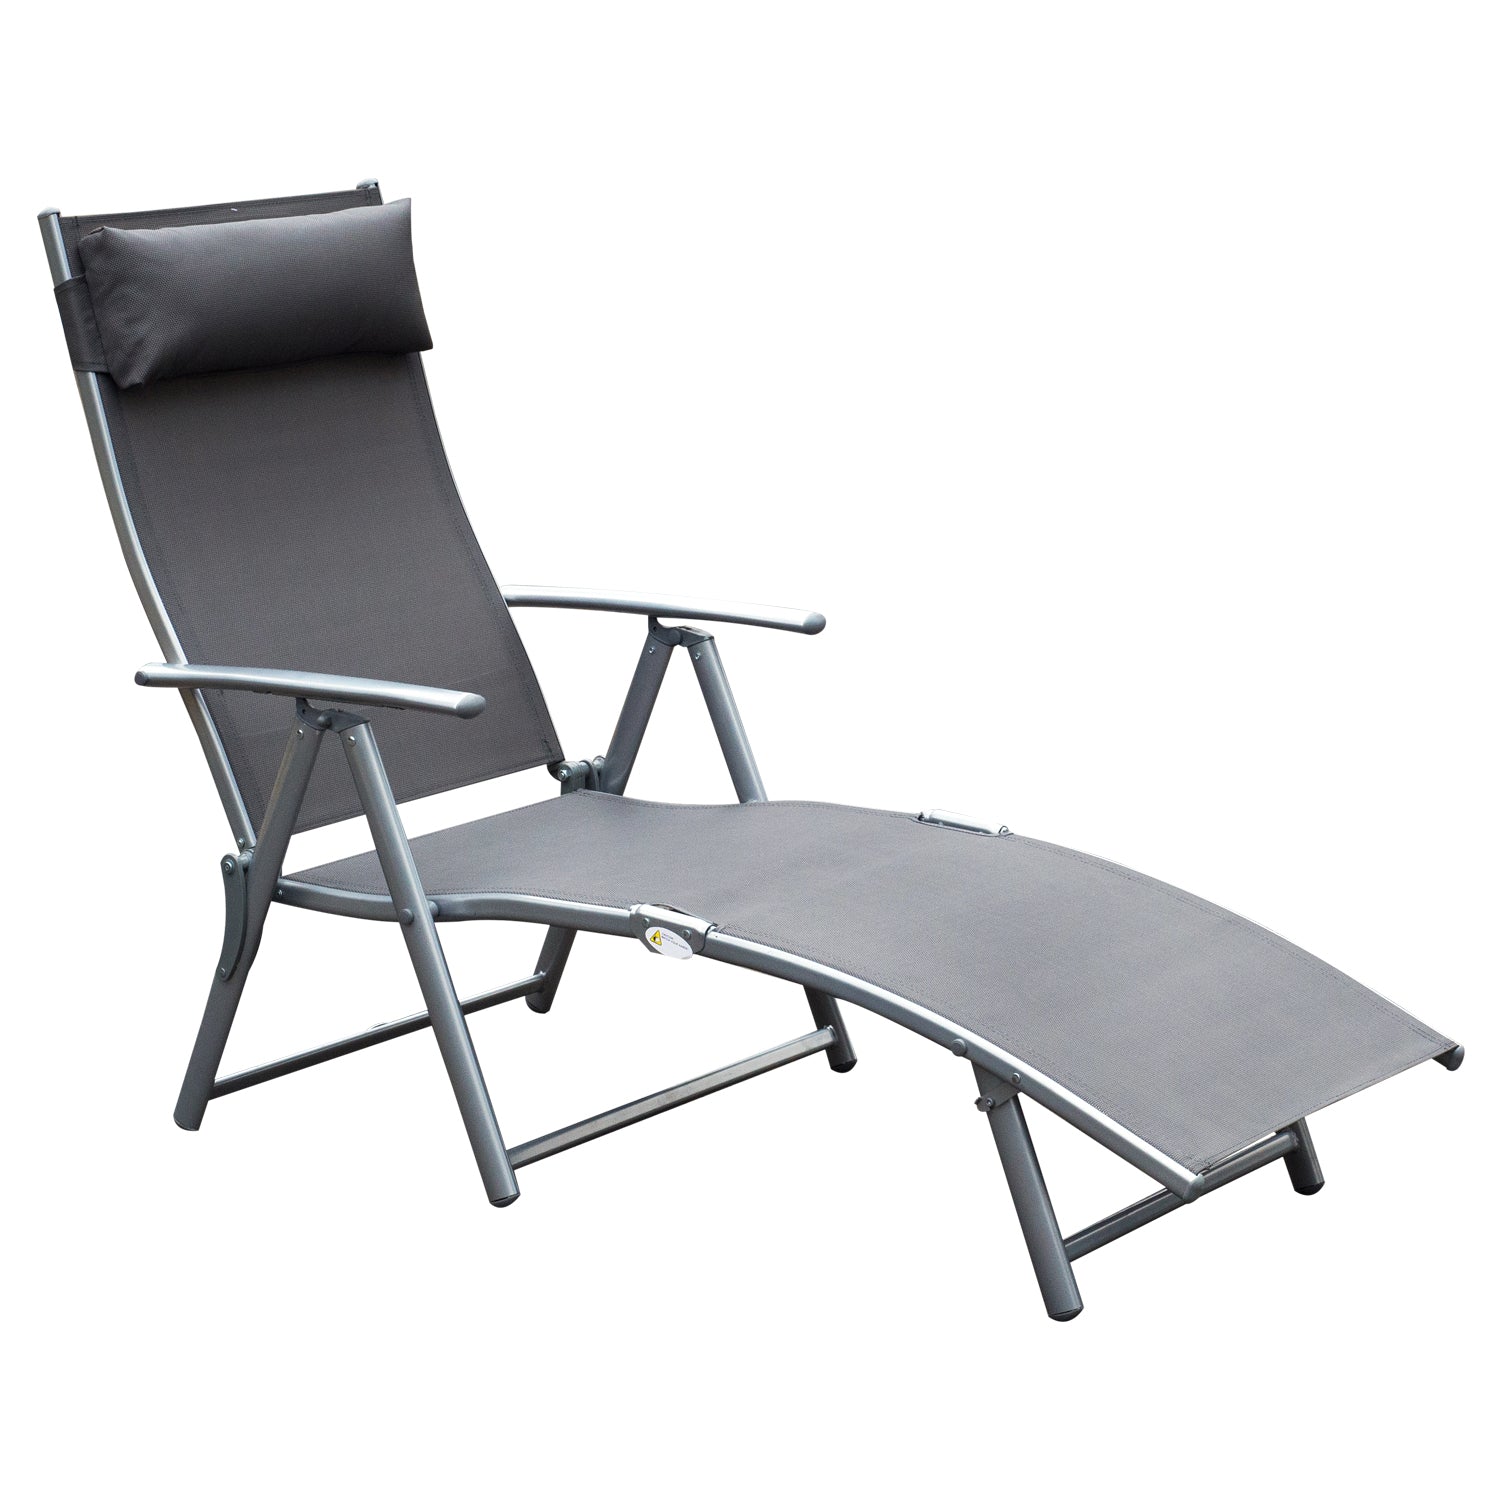 Nancy's Tustin Lounger - Garden chair - Lounge chair - Cushion - Foldable - Gray - Metal - Textile